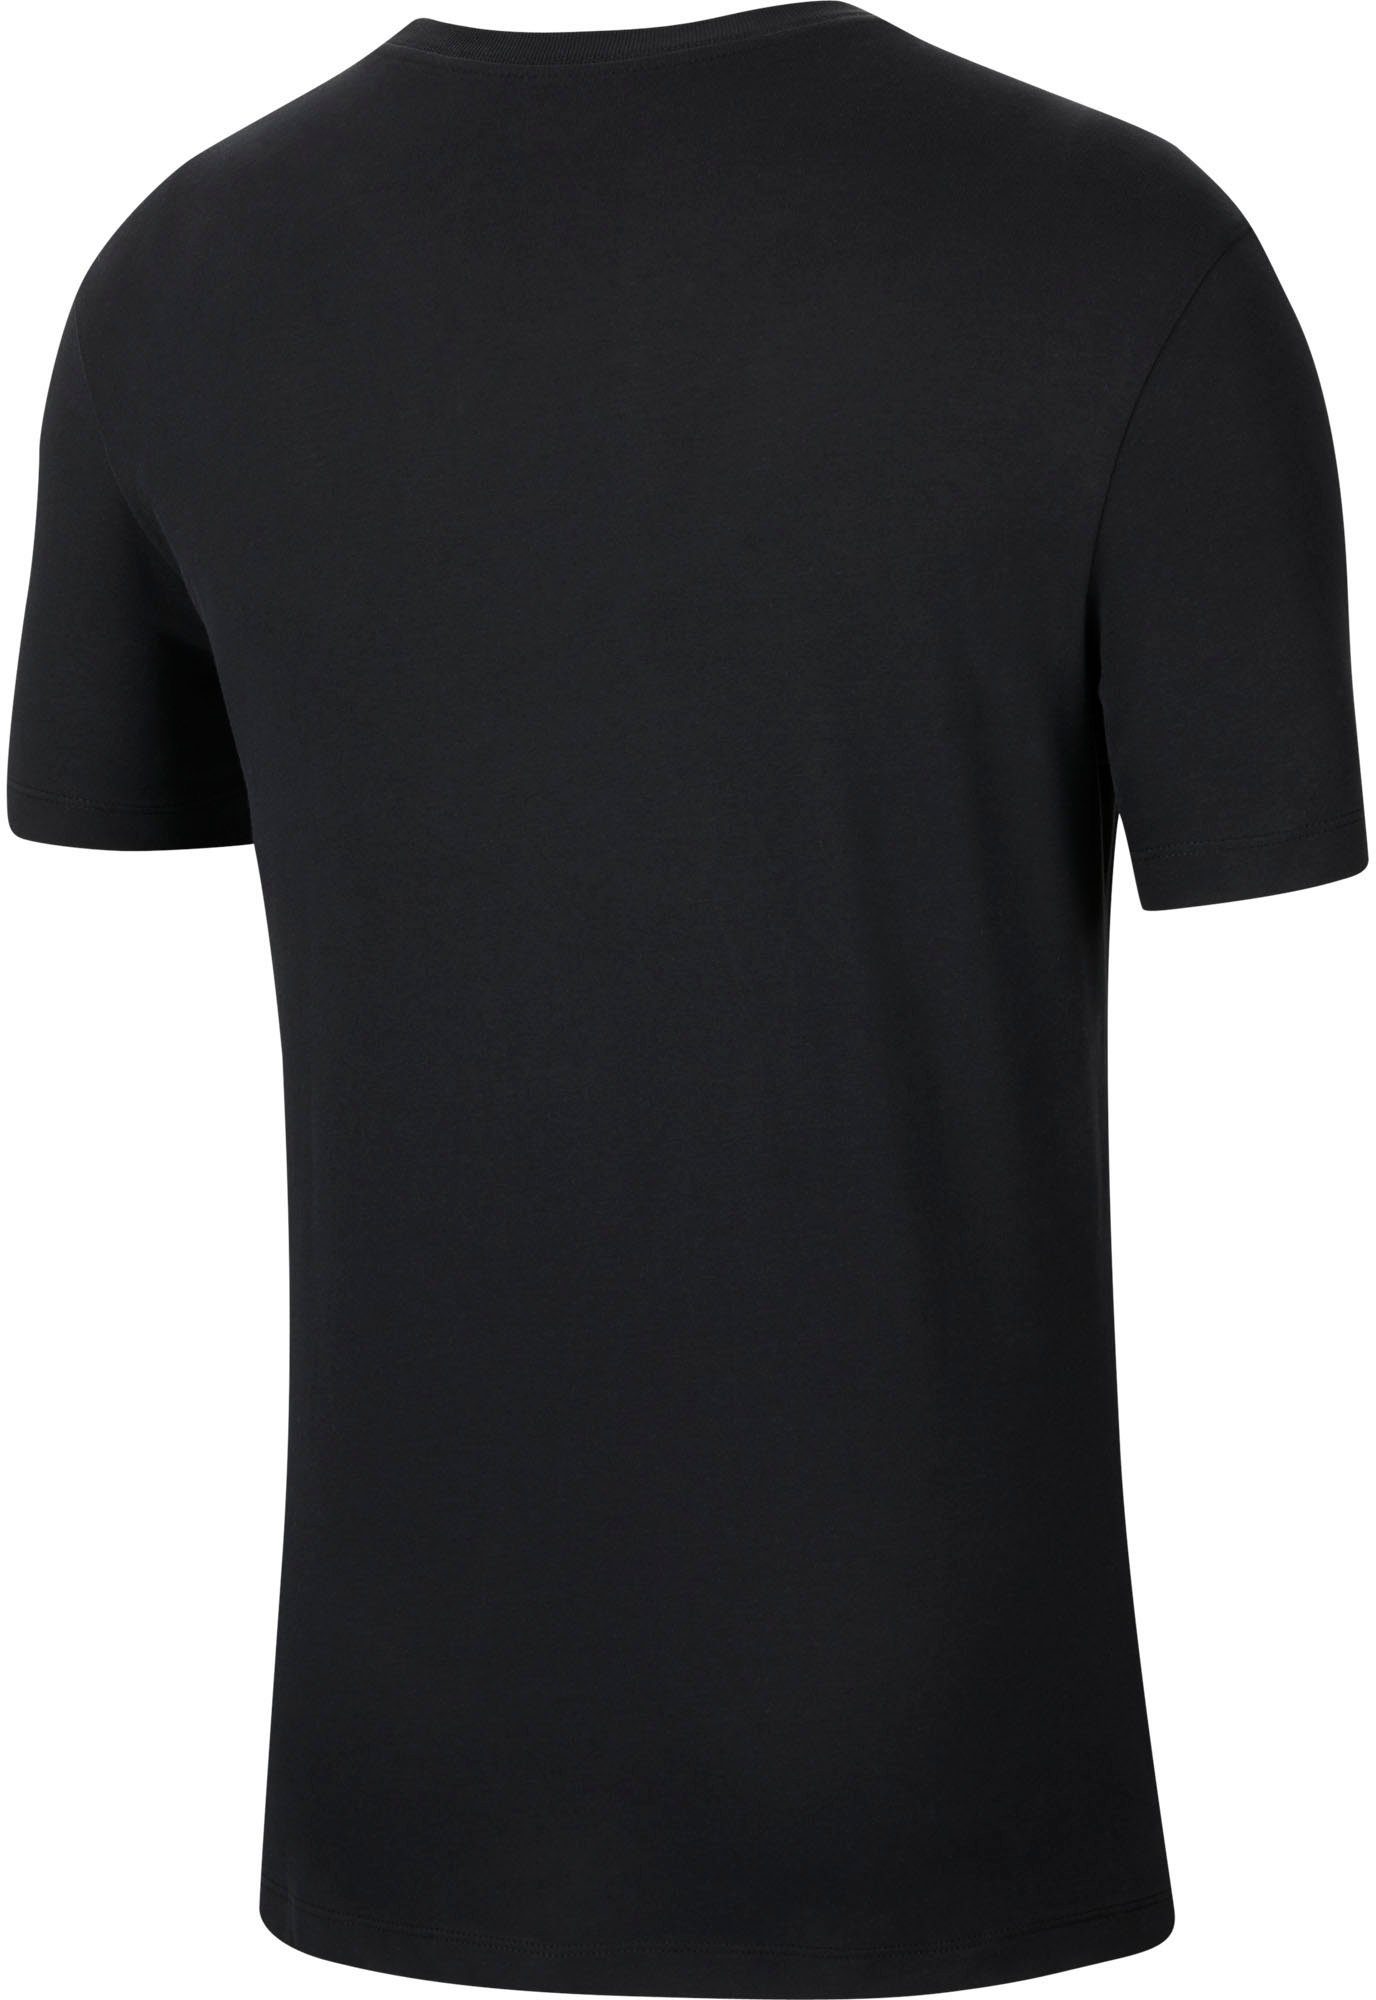 Nike Trainingsshirt Dri-FIT Men's Swoosh Training T-Shirt schwarz